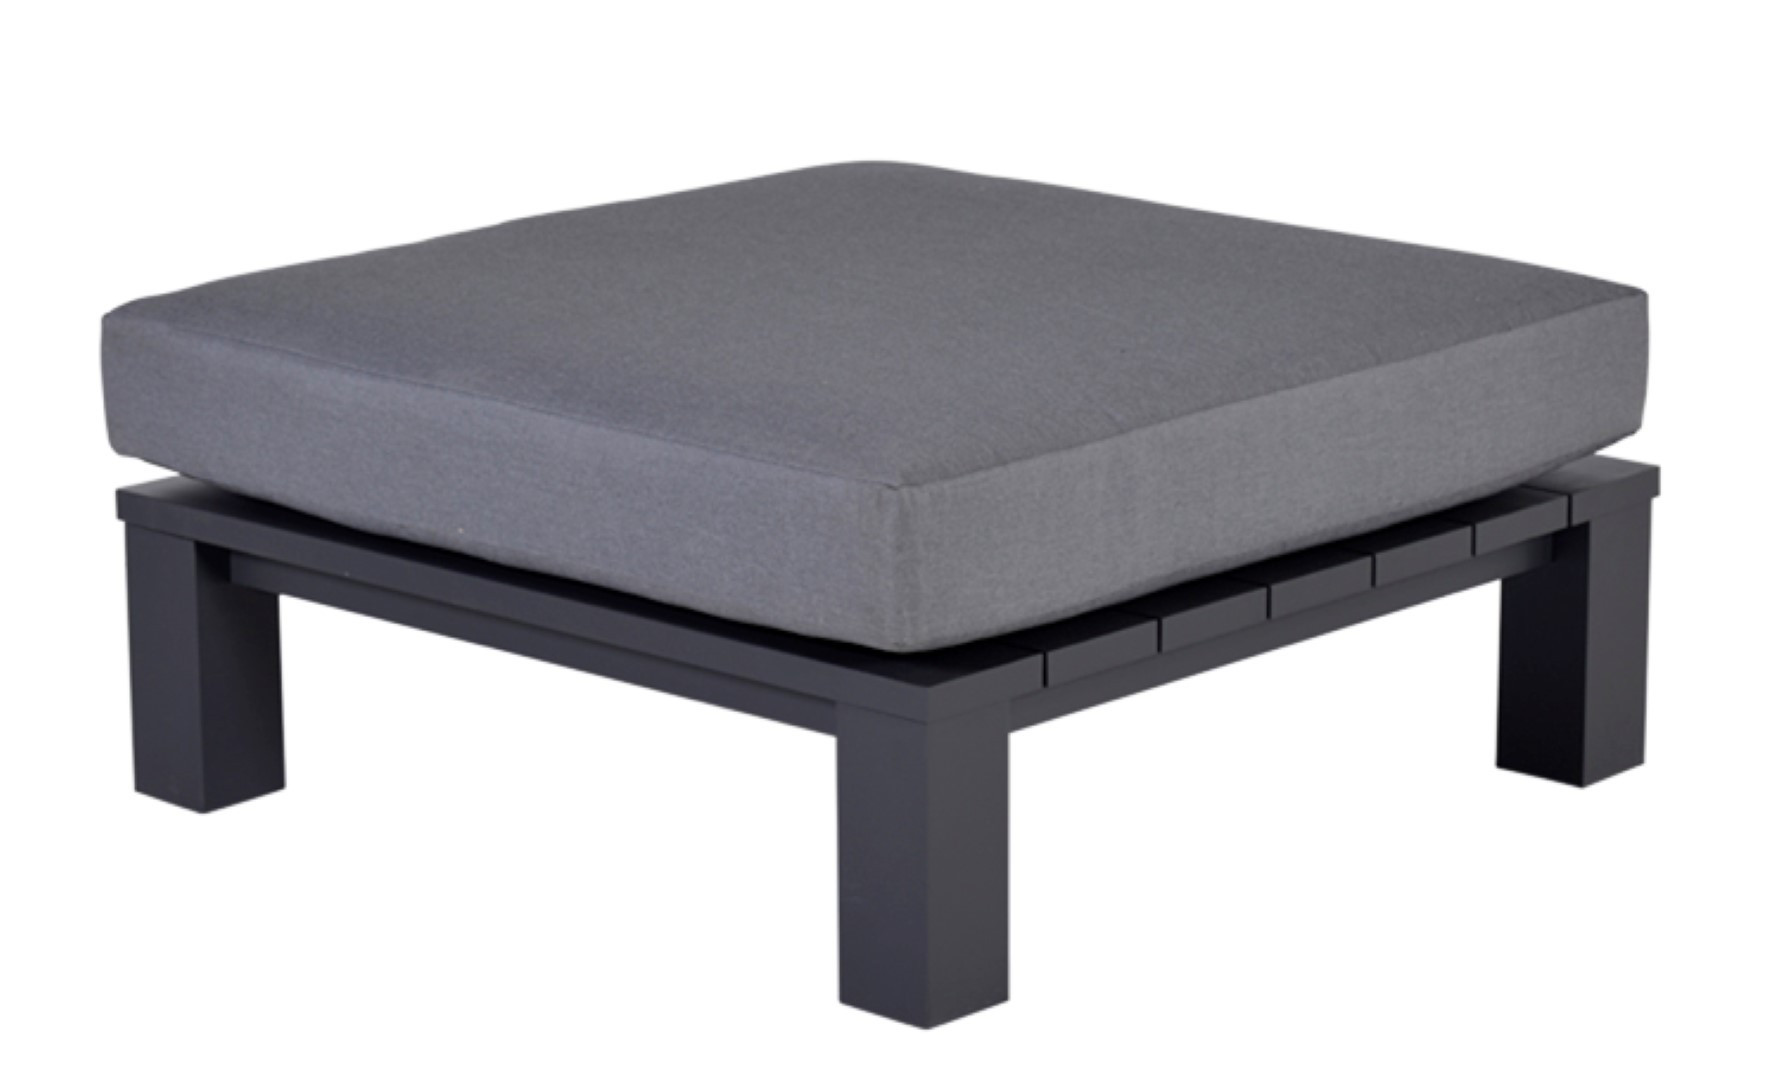 Cube lounge tafel 100x100xH30 cm carbon black reflex black - Garden Impressions